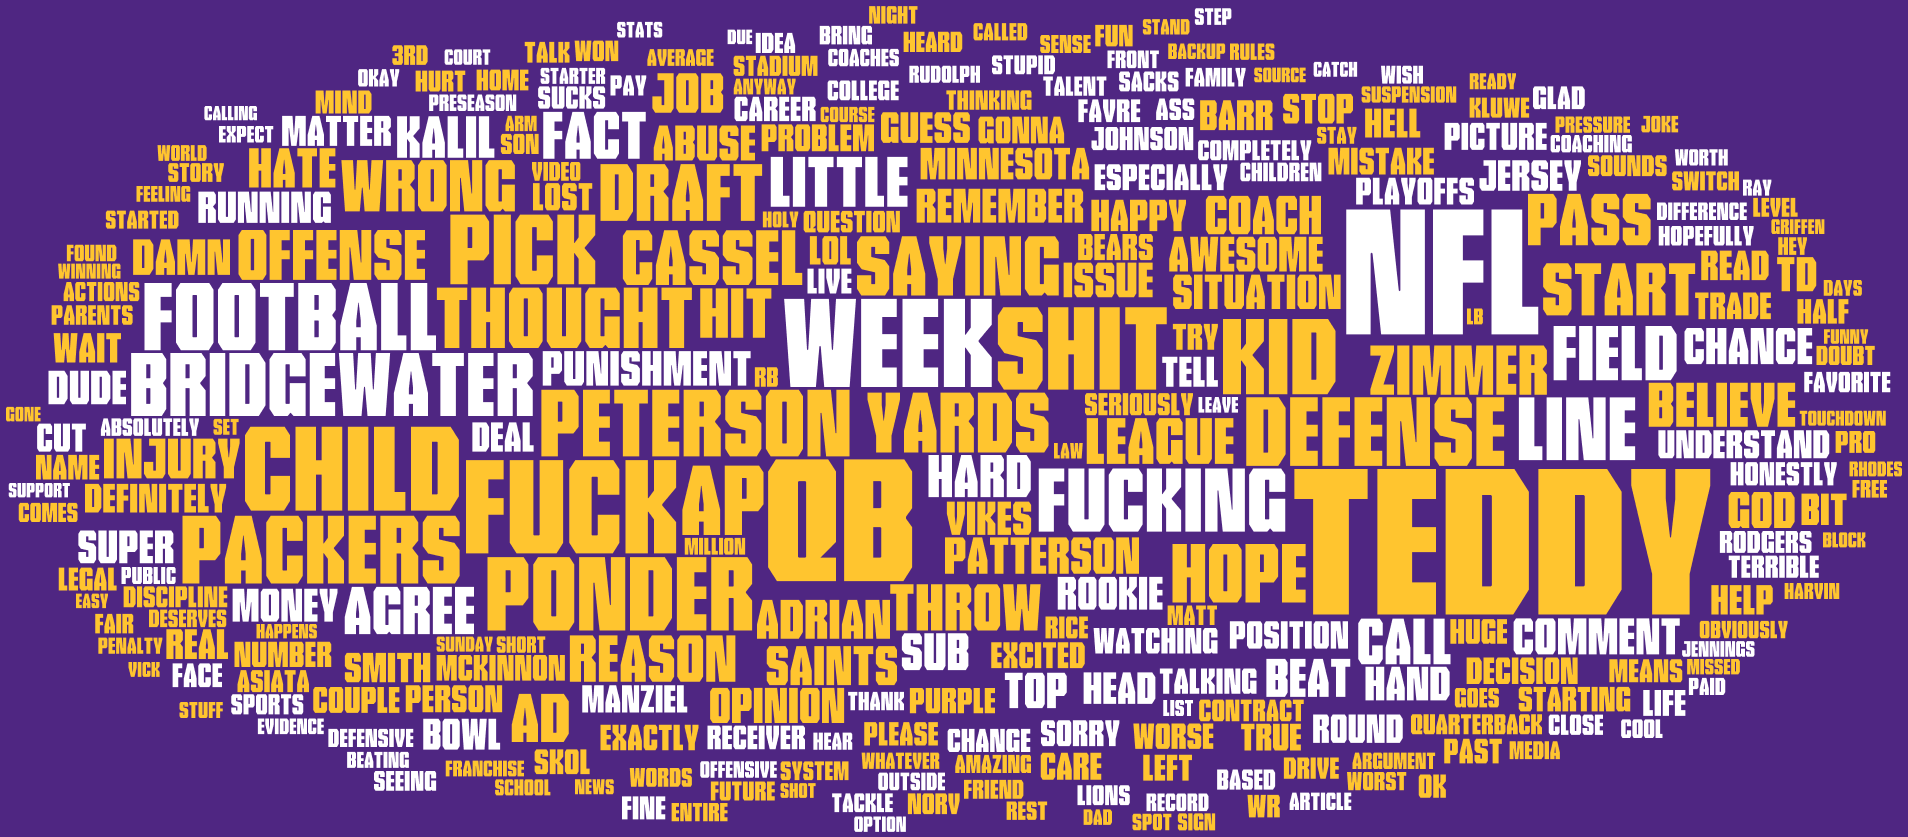 Minnesota Vikings 2015 Schedule Wallpaper, 43 Minnesota Vikings